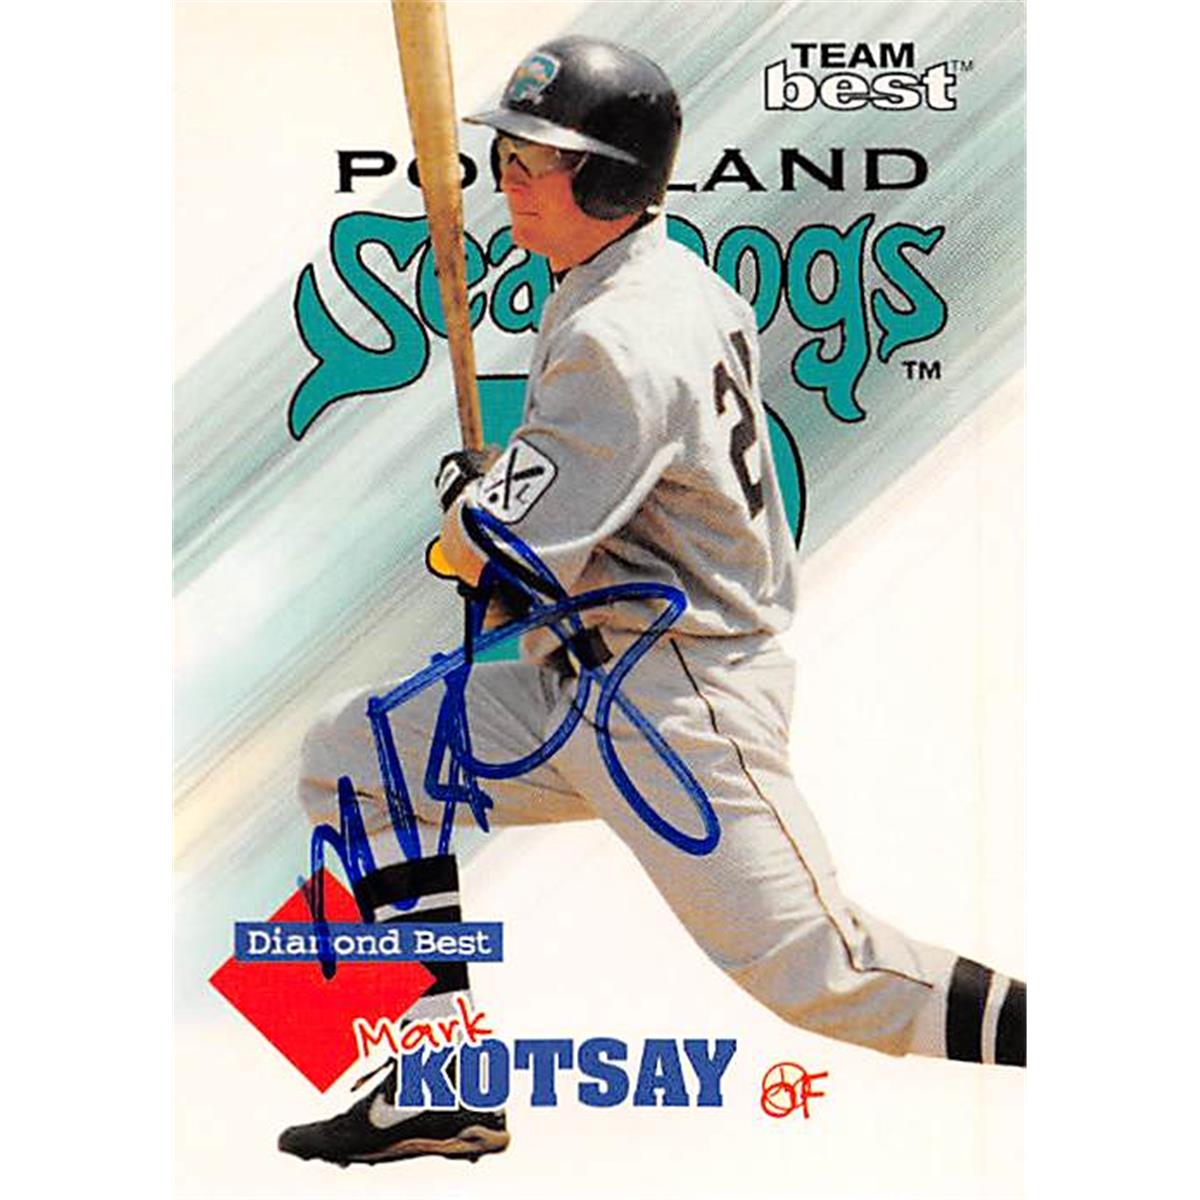 Picture of Autograph Warehouse 366530 Mark Kotsay Autographed Baseball Card - Portland Seadogs 1998 Team Best Minor League Rookie No.4